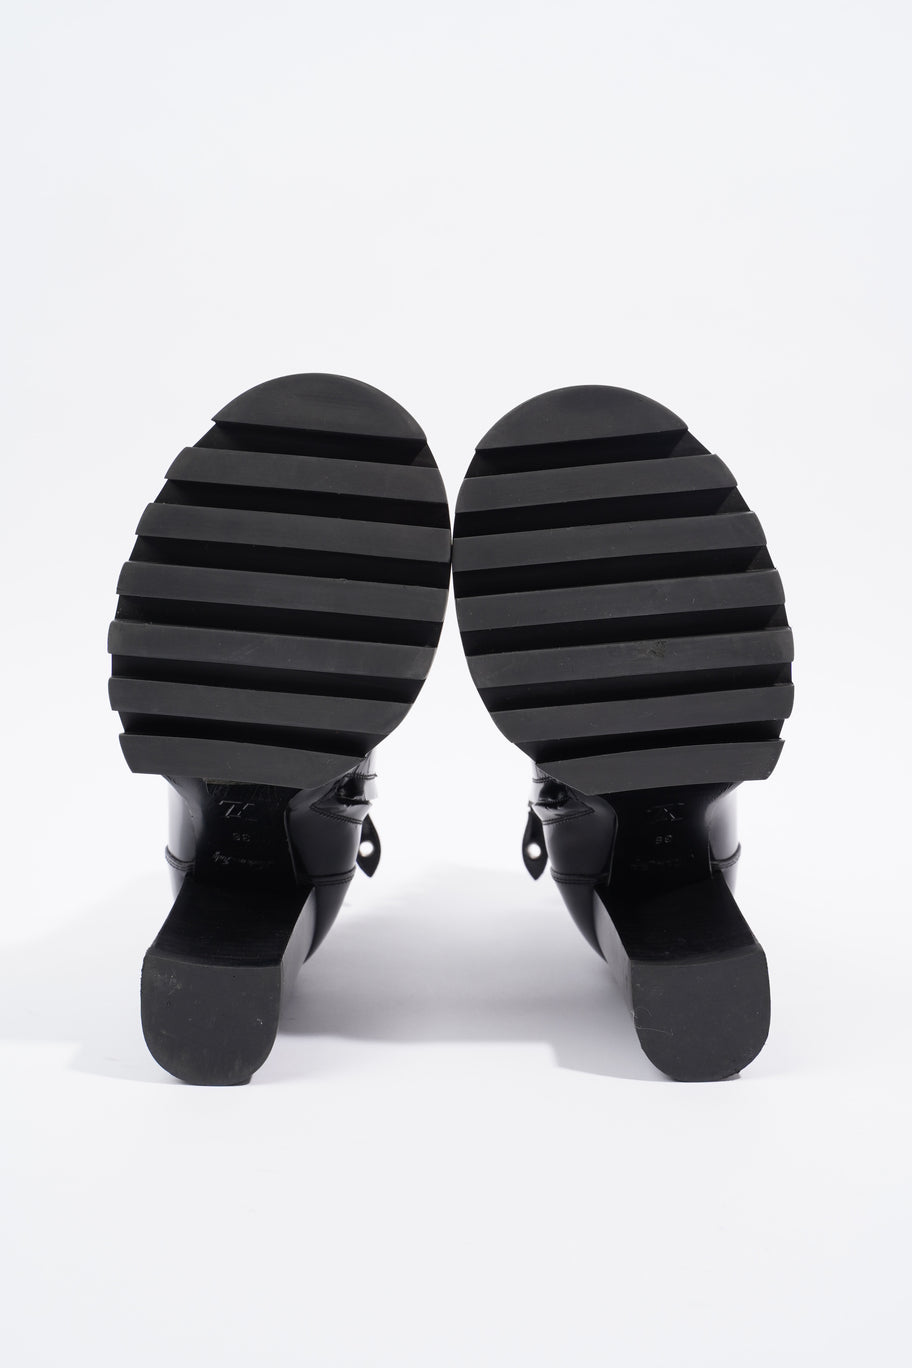 Louis Vuitton Star Trail Ankle Boot Patent Black EU 36 / UK 3 Image 7